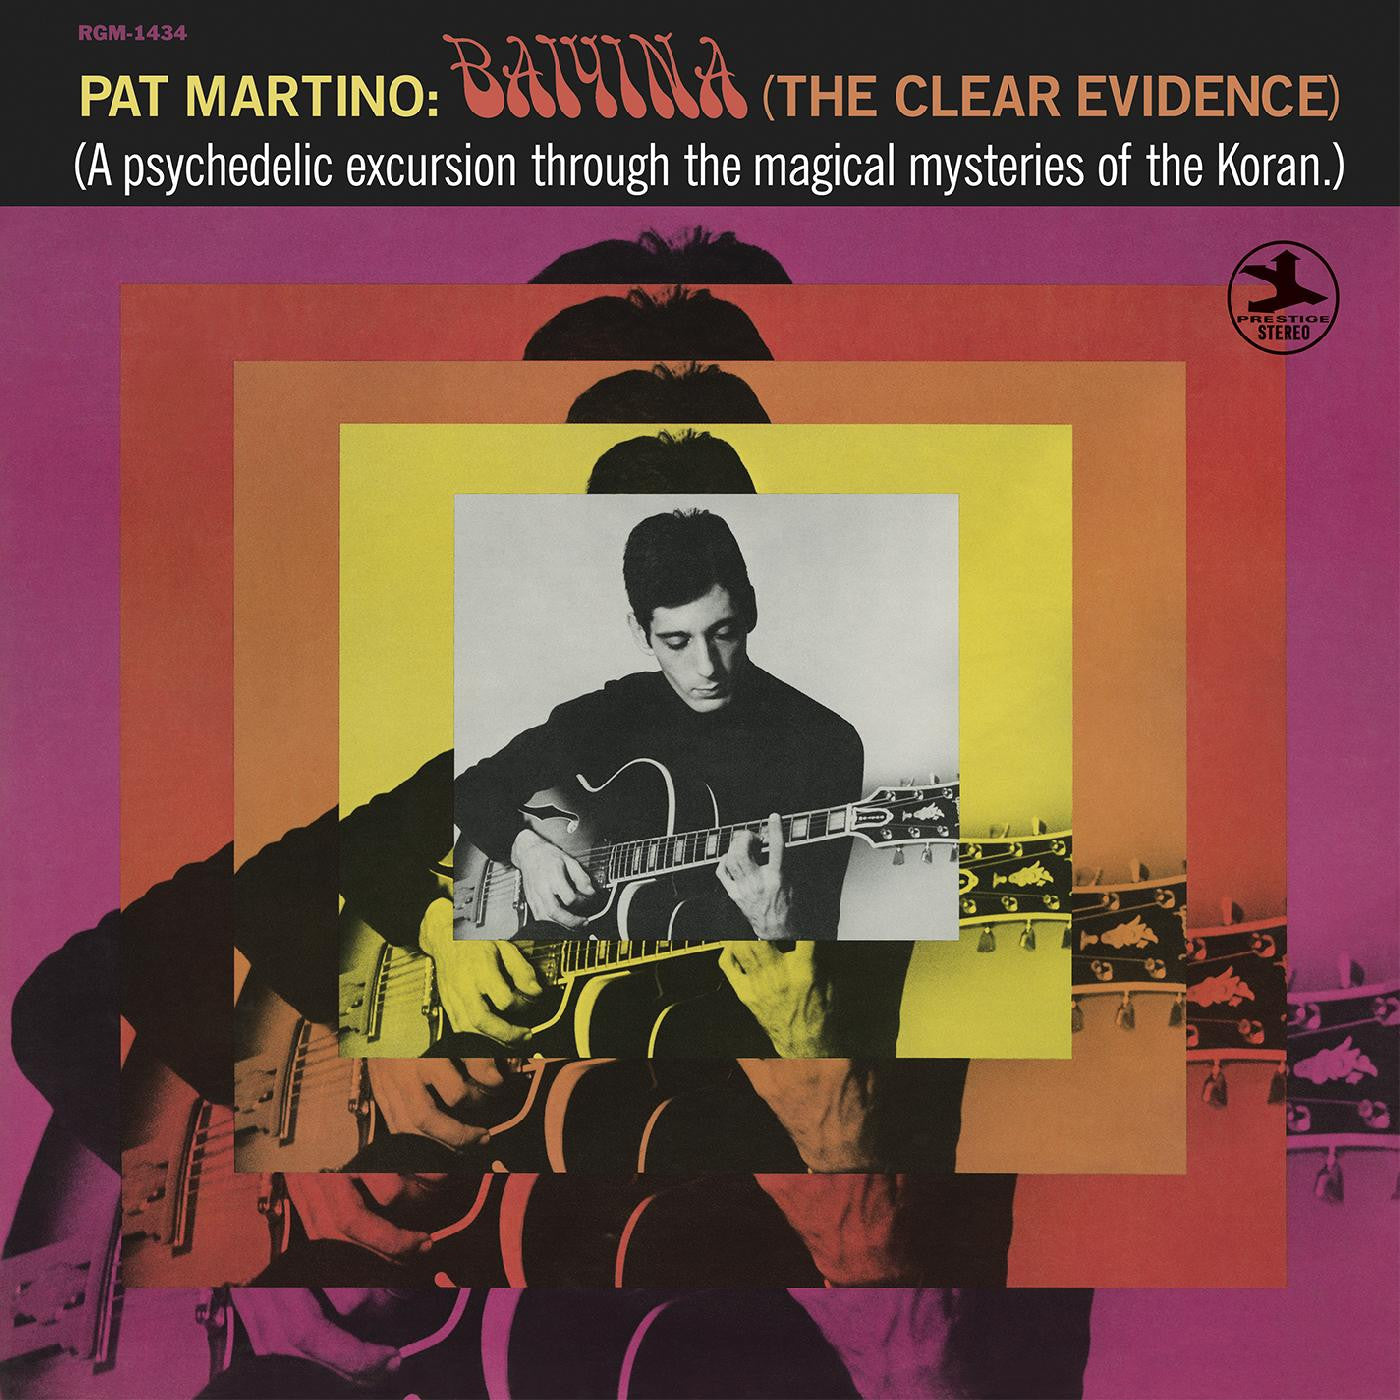 Pat Martino - Baiyina (The Clear Evidence) LP